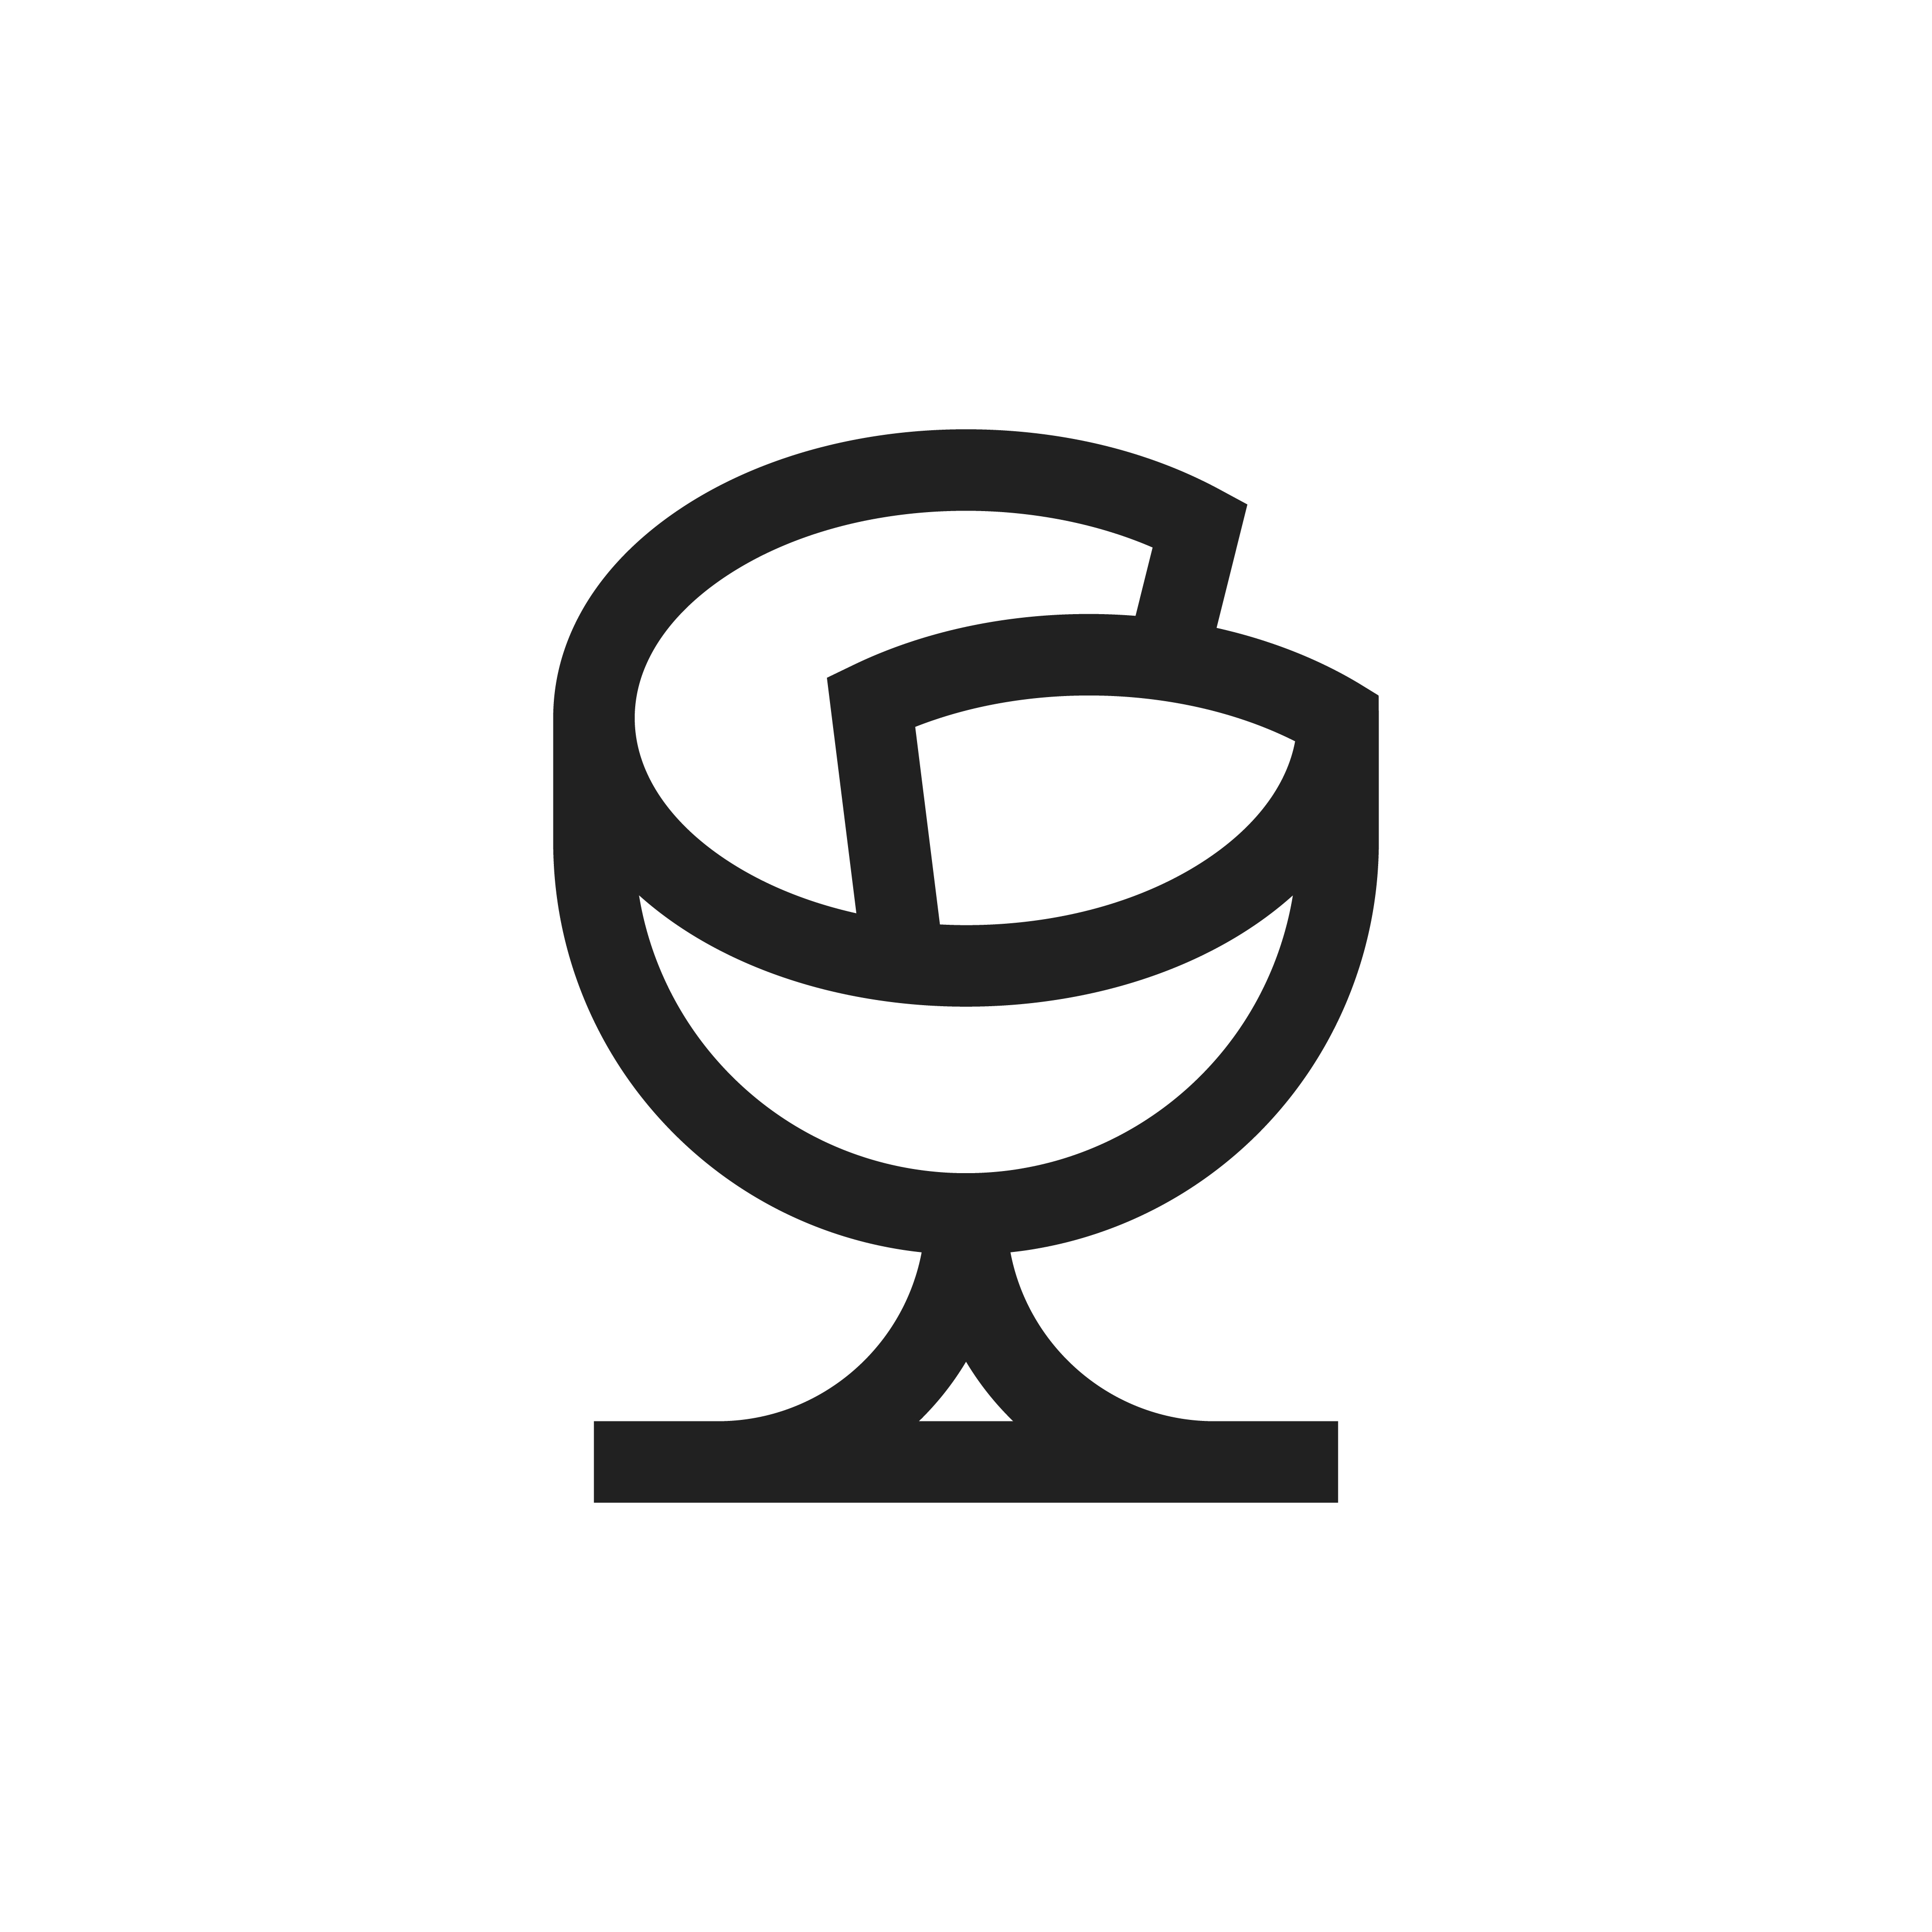 Letter G logo design by logo designer Francesco Bonetti for your inspiration and for the worlds largest logo competition